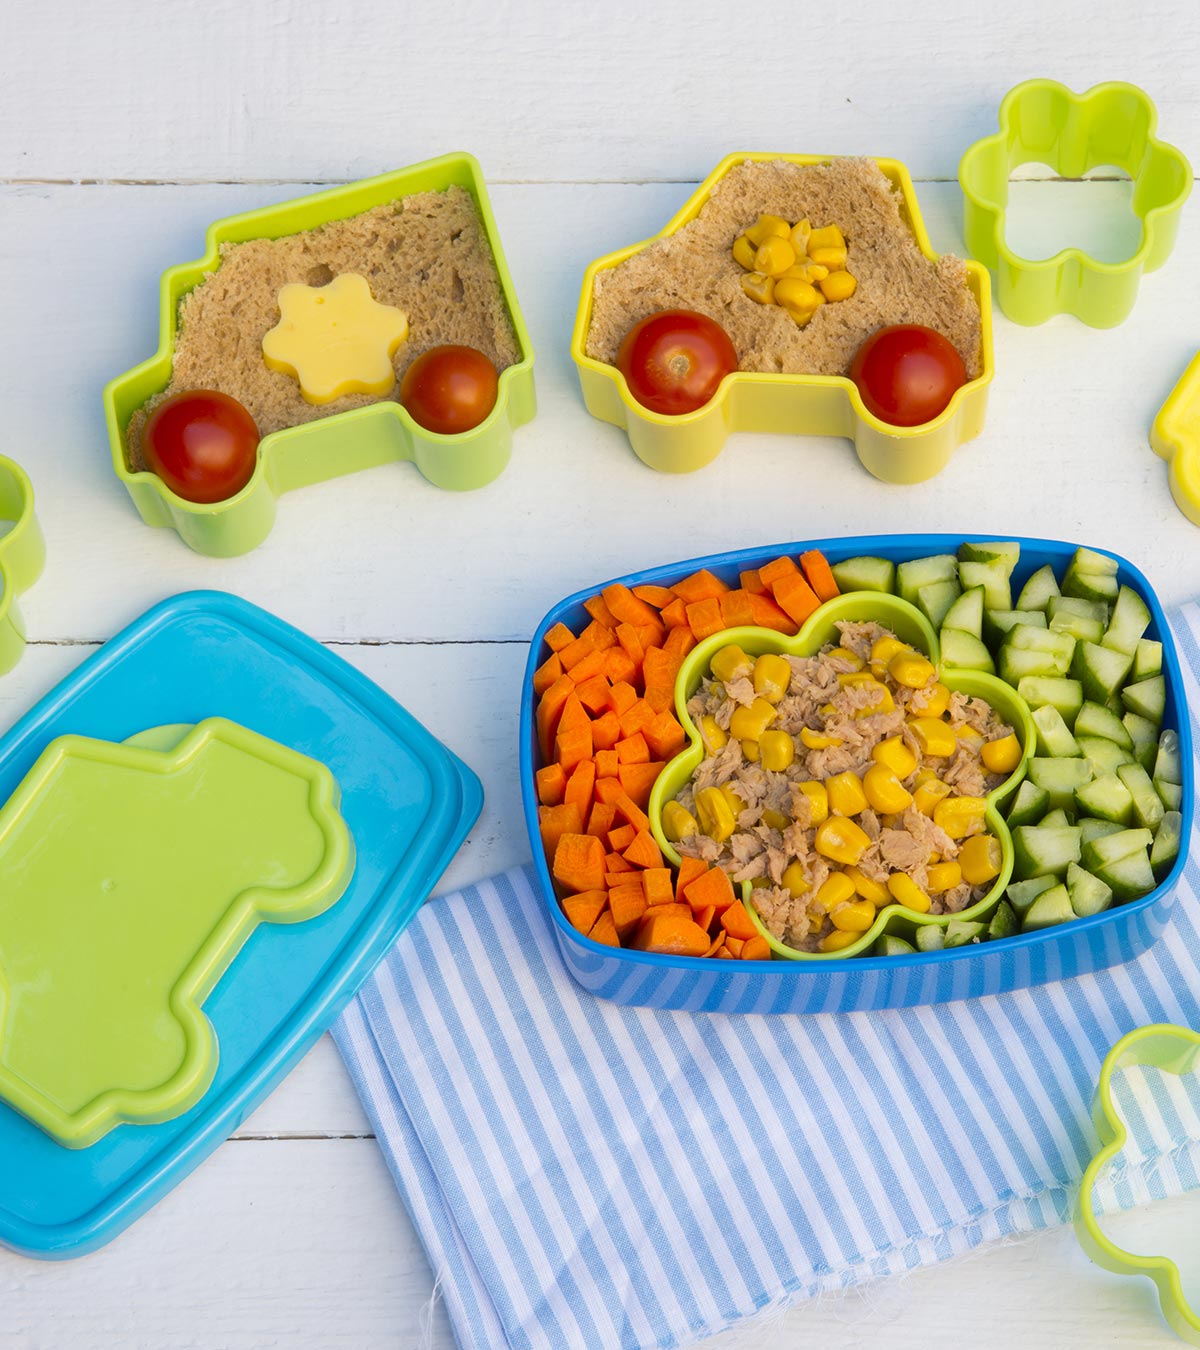 https://www.momjunction.com/wp-content/uploads/2014/06/15-Best-Lunch-Boxes-For-Kids-In-2019-1.jpg